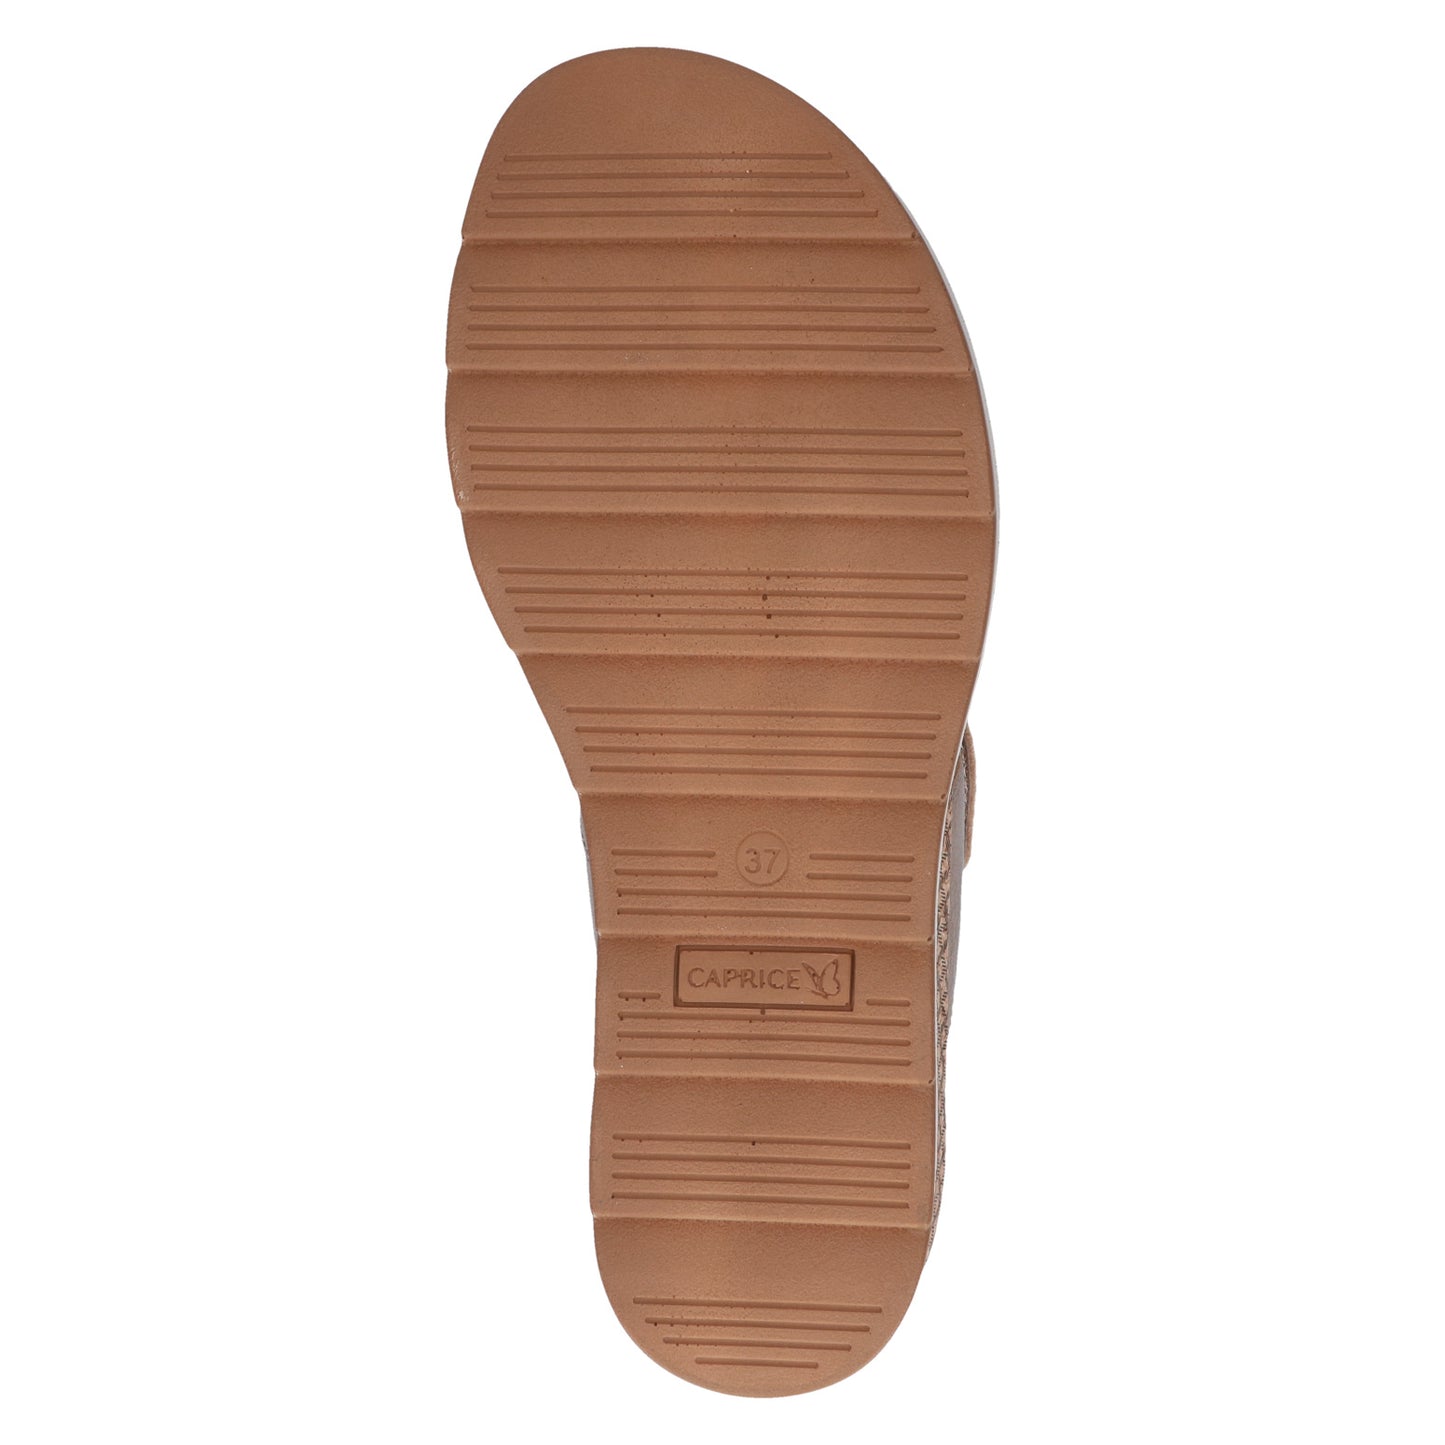 Caprice - Ladies Shoes Sandals Pewter (2250)